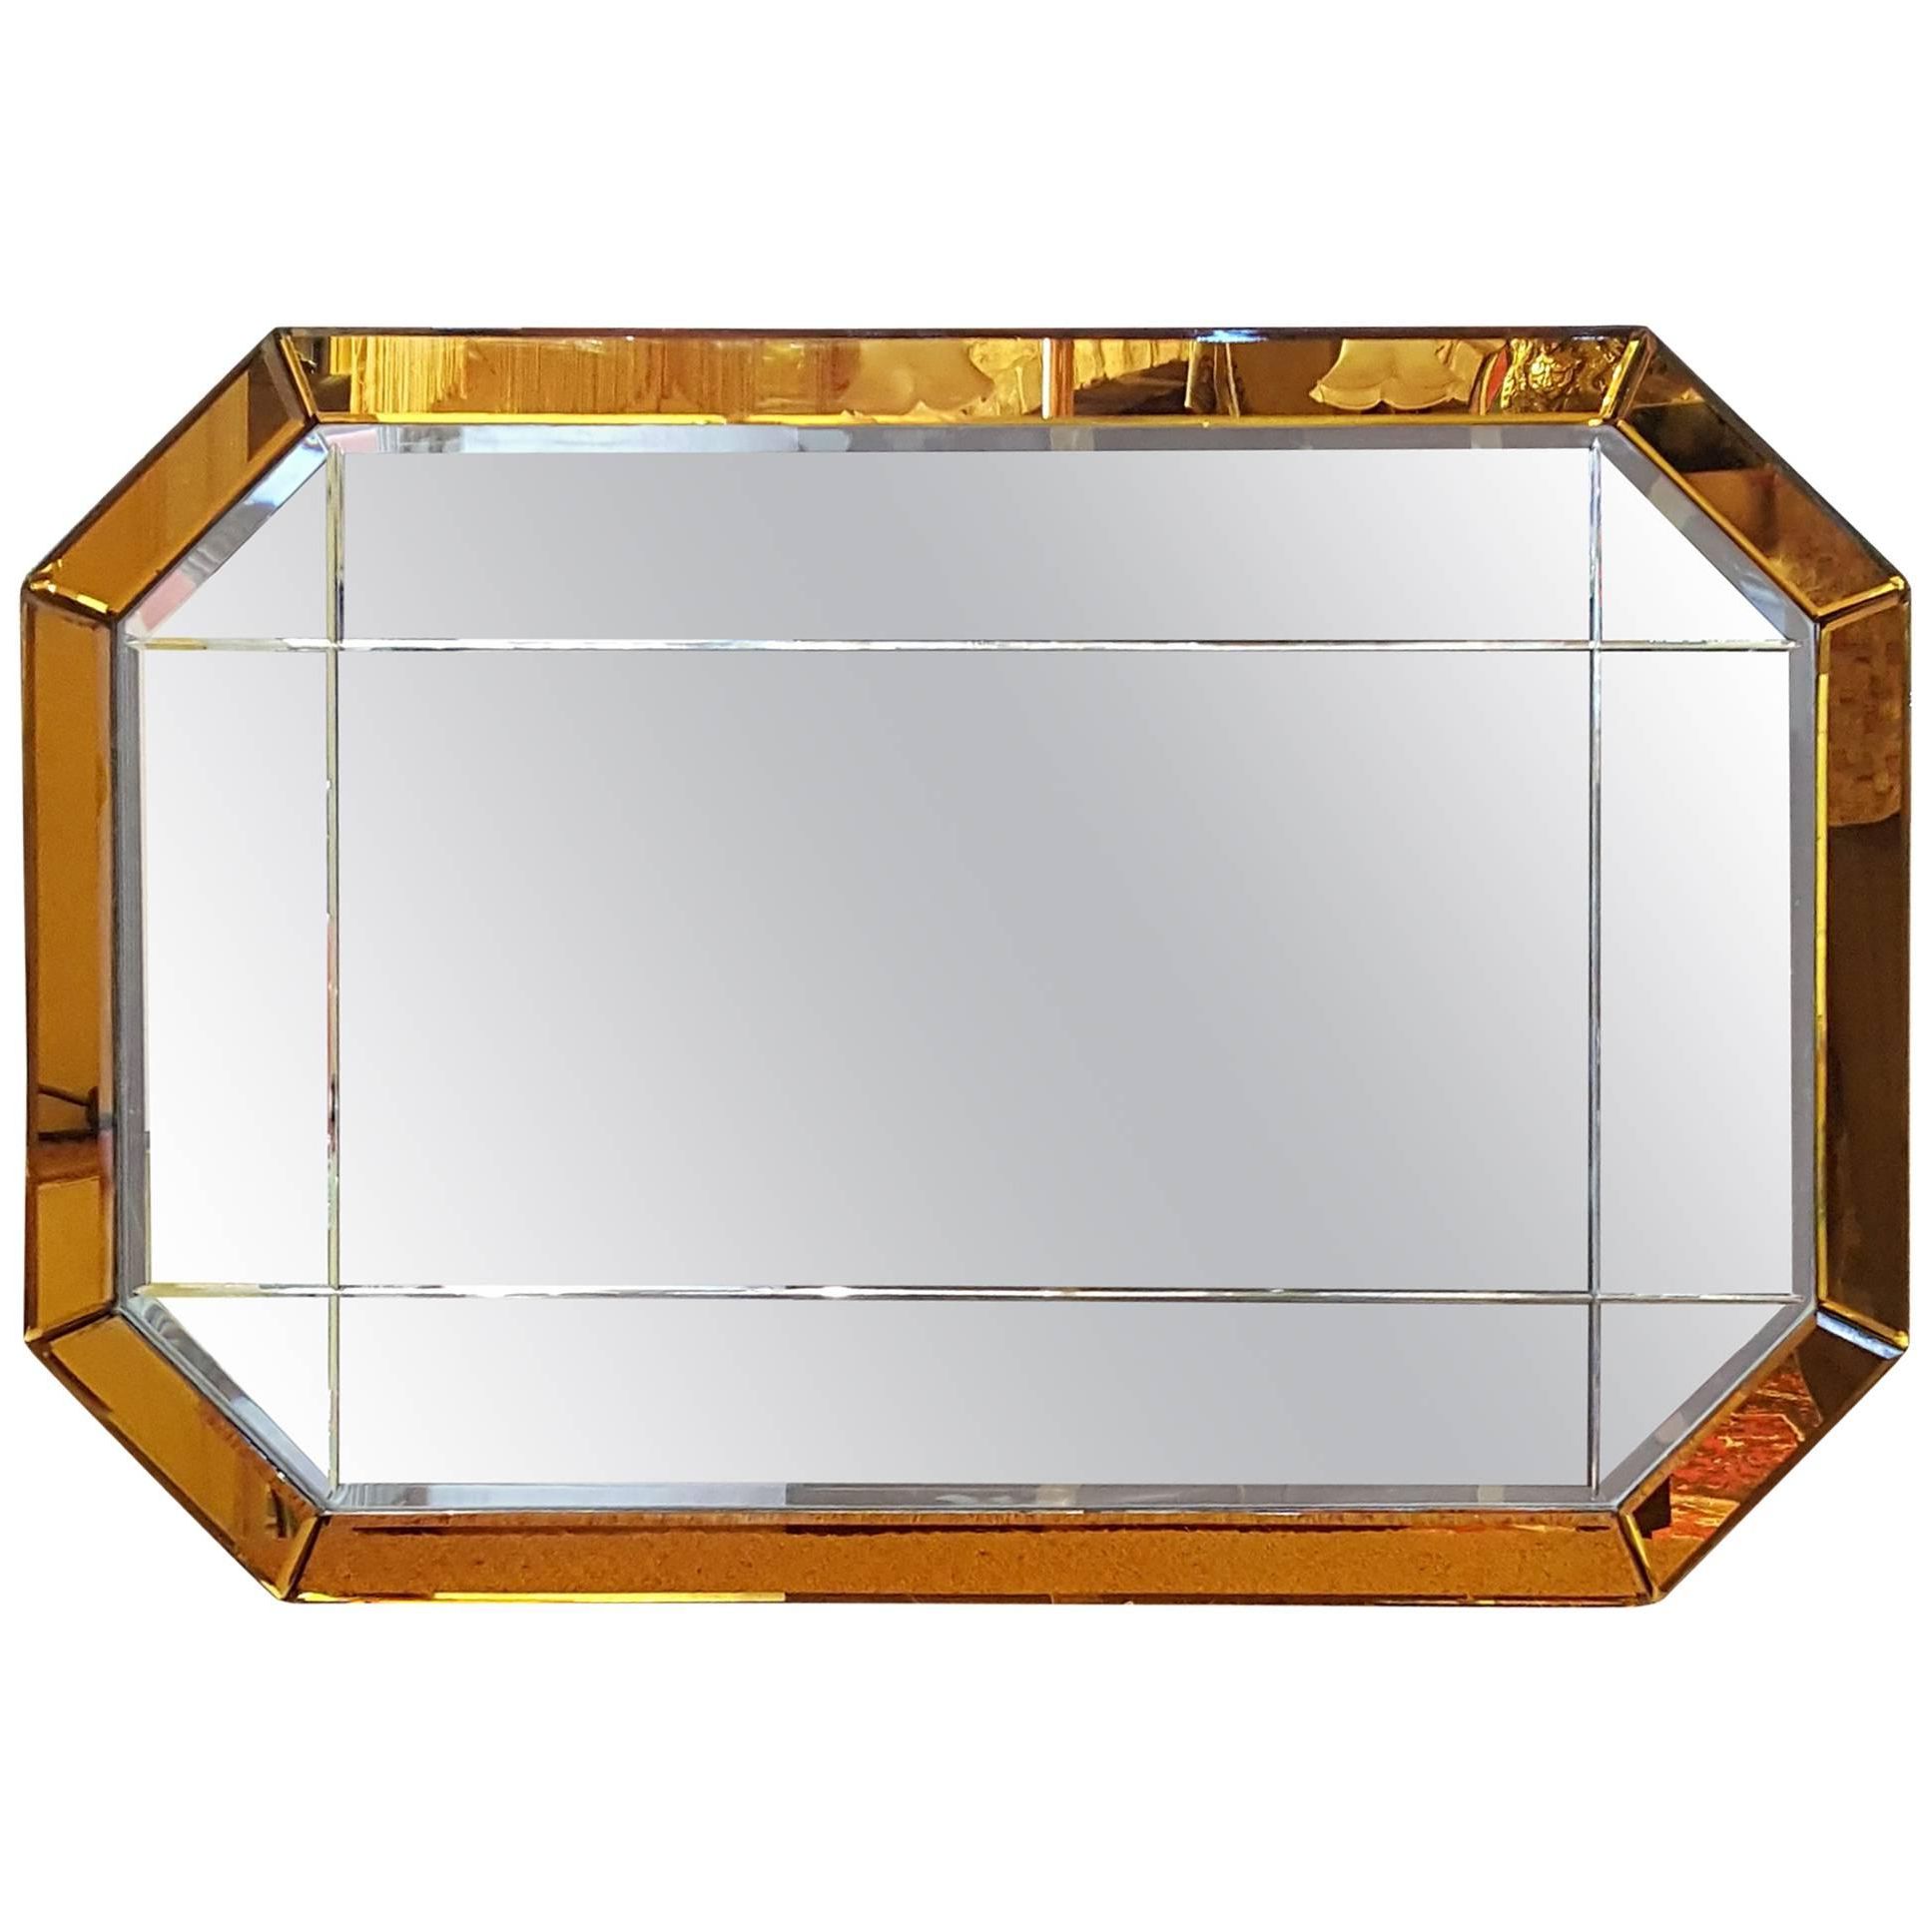 Art Deco Wall Mirrors Regarding Latest Art Deco Wall Mirror (View 16 of 20)